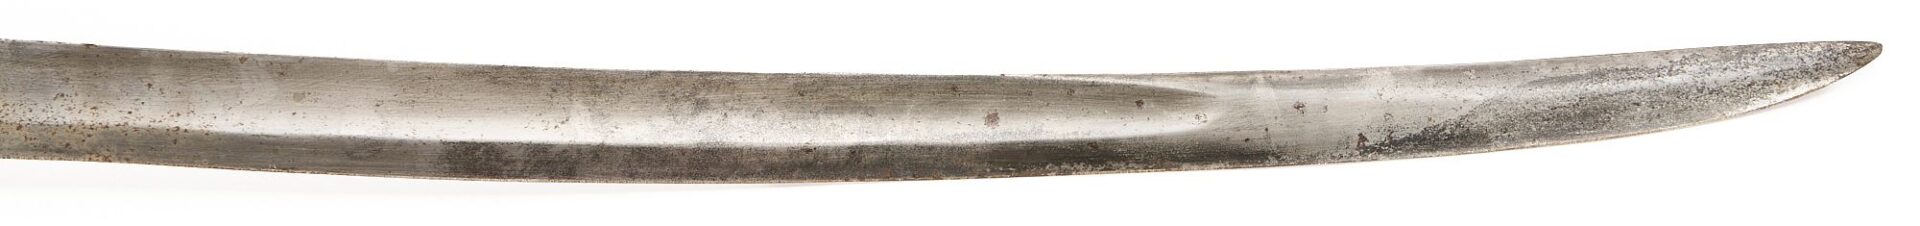 Lot 553: 2 Civil War Era Swords incl. USMC & Naval Cutlass